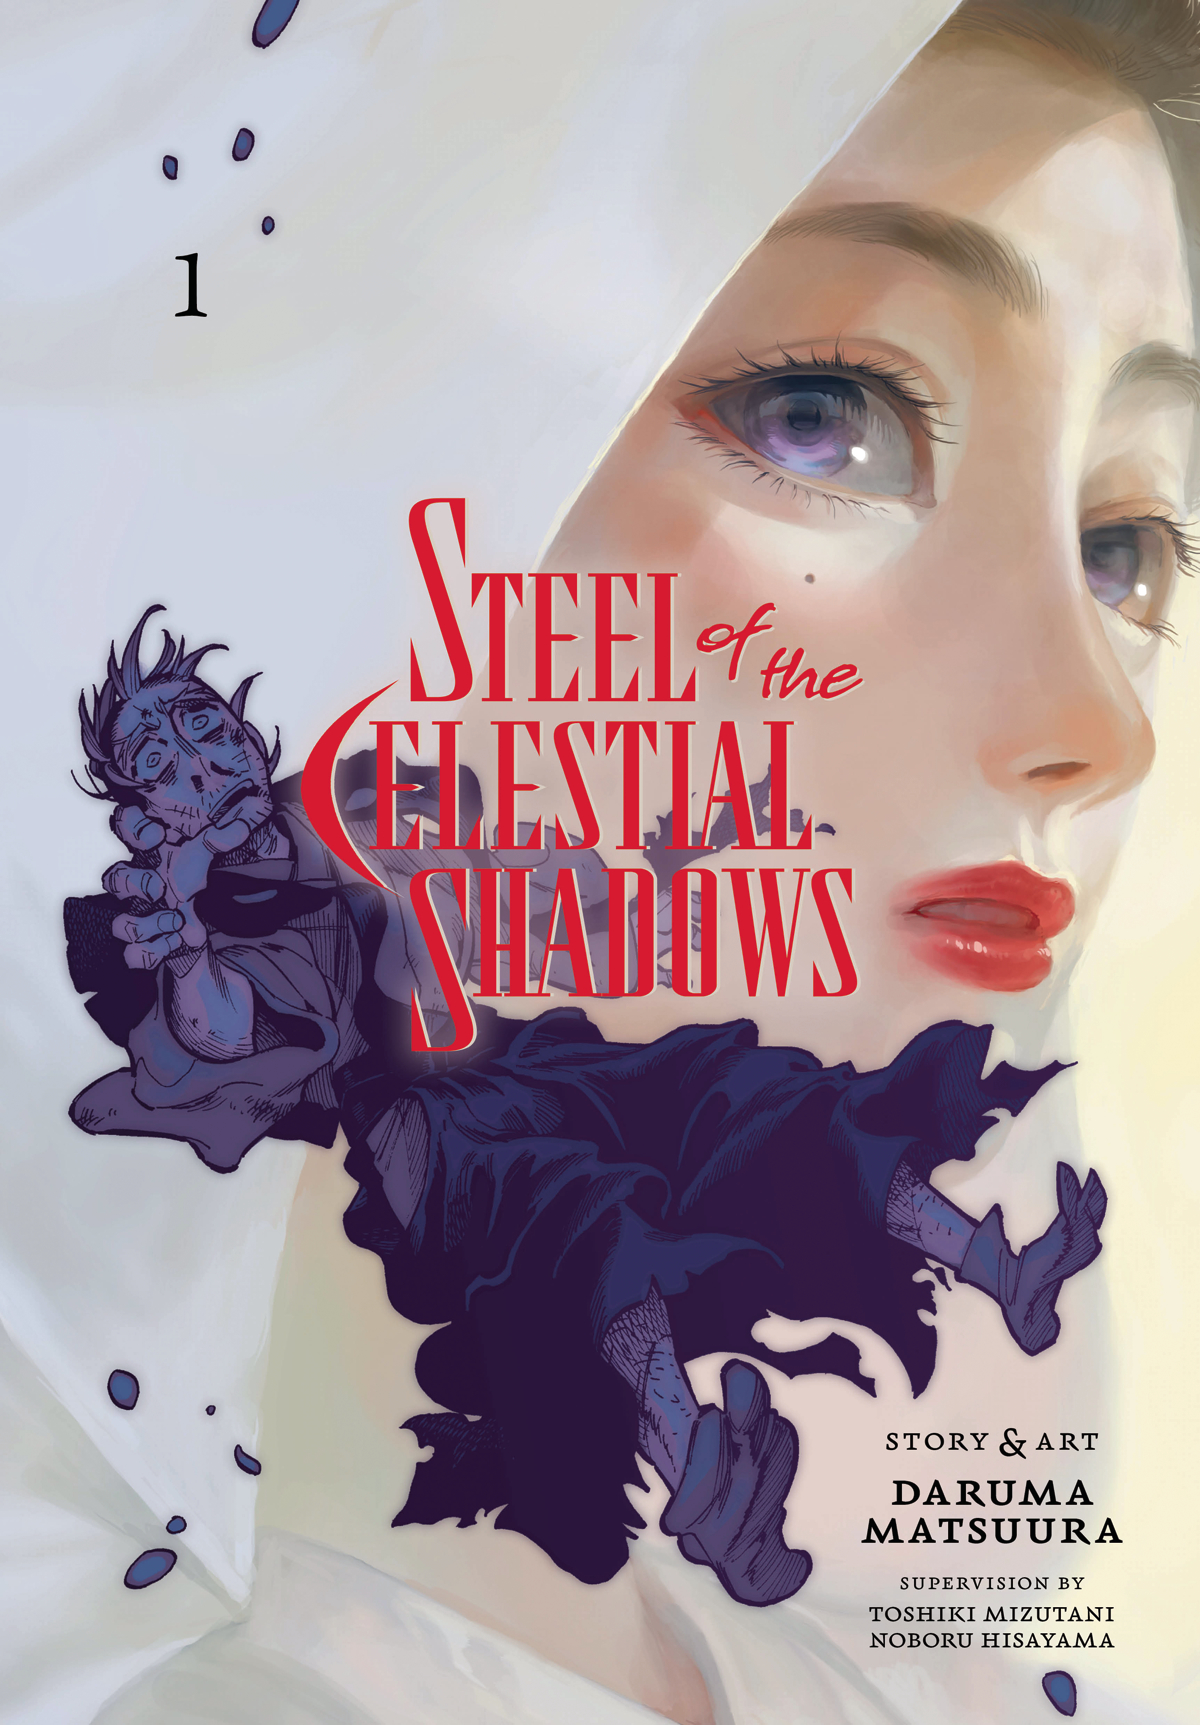 Steel of the Celestial Shadows Manga Volume 1